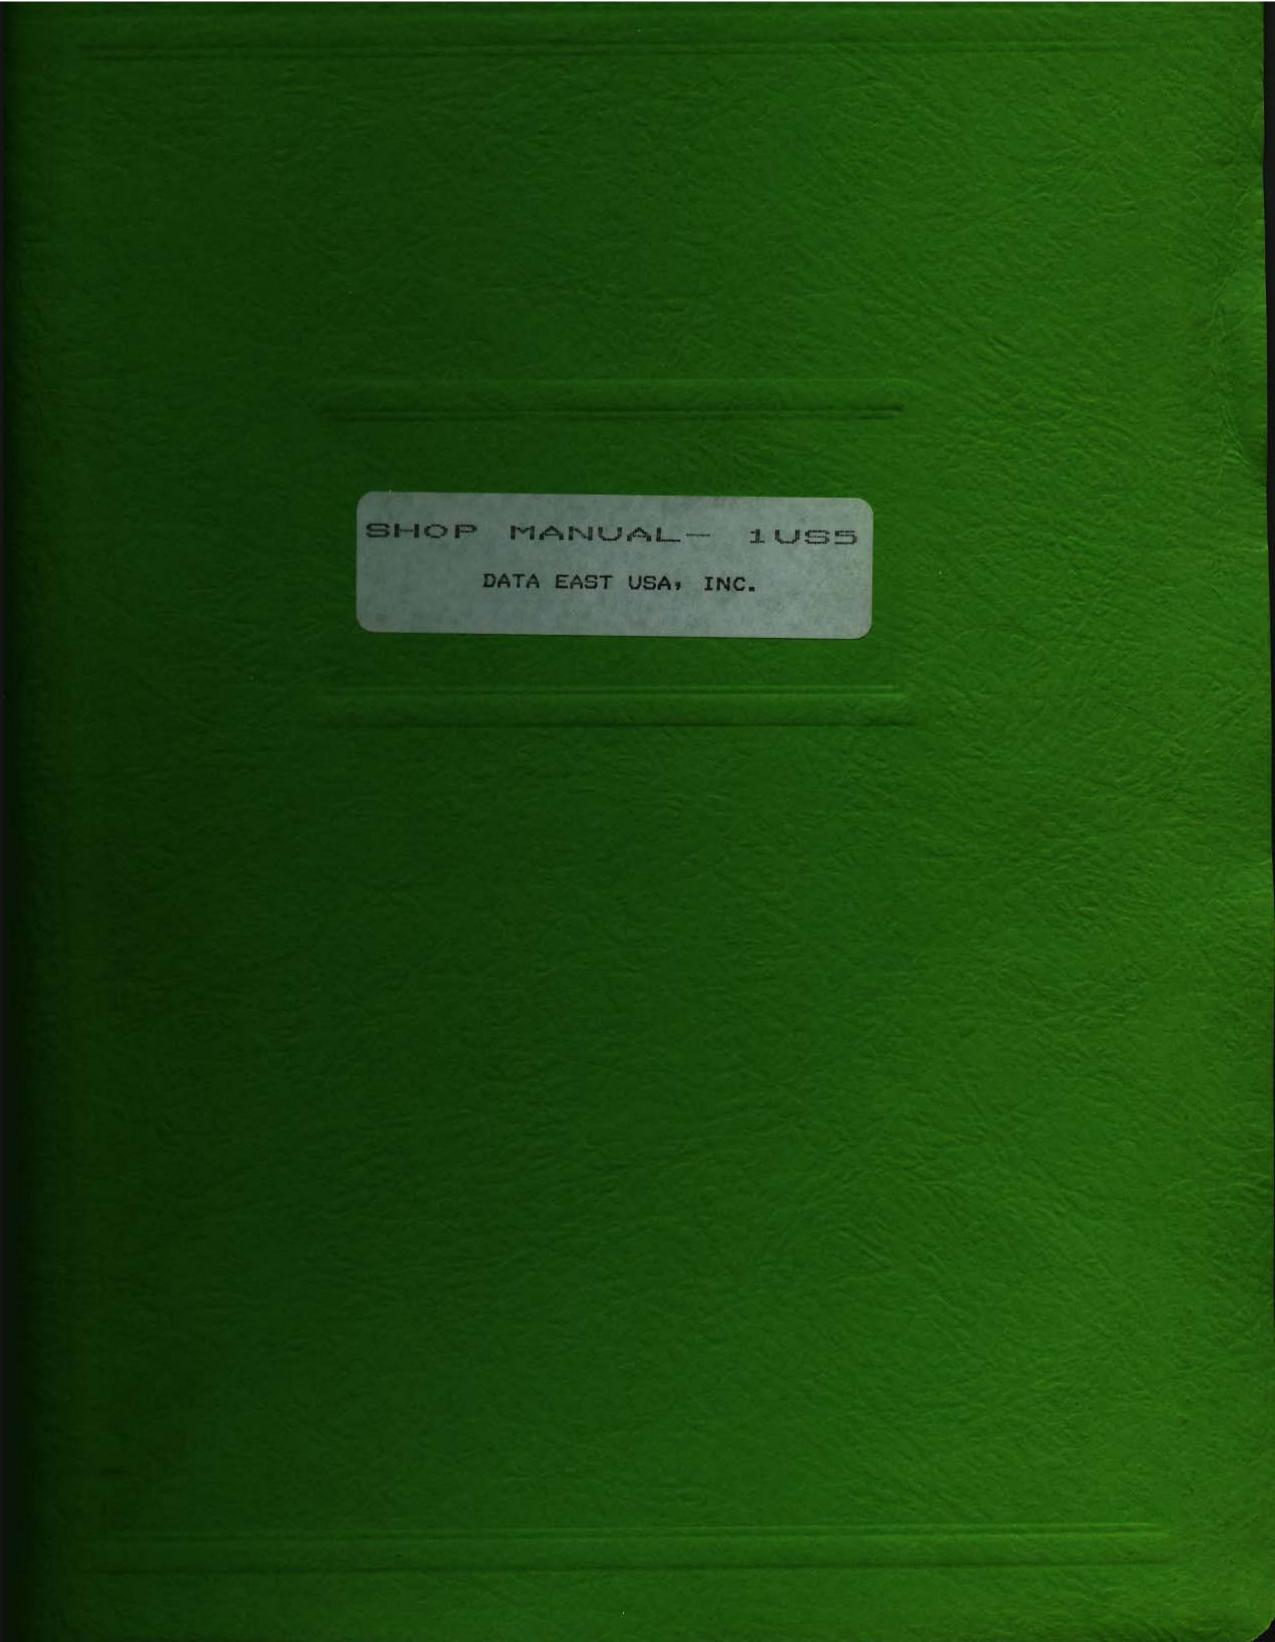 Microsoft Word - 040907 Sonic Spinner 07 Manual.doc